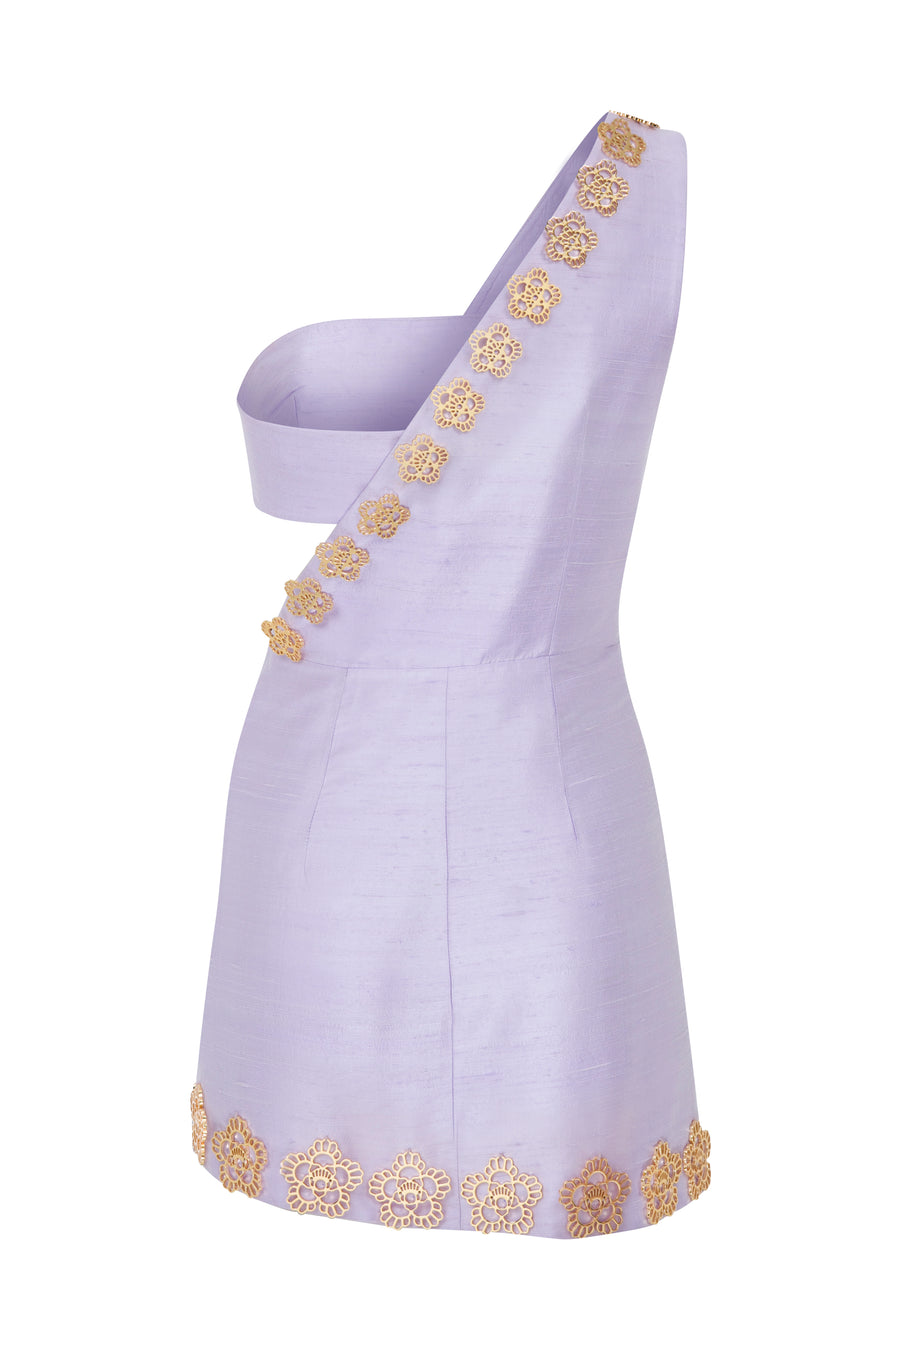 Azalea Iconic Dress